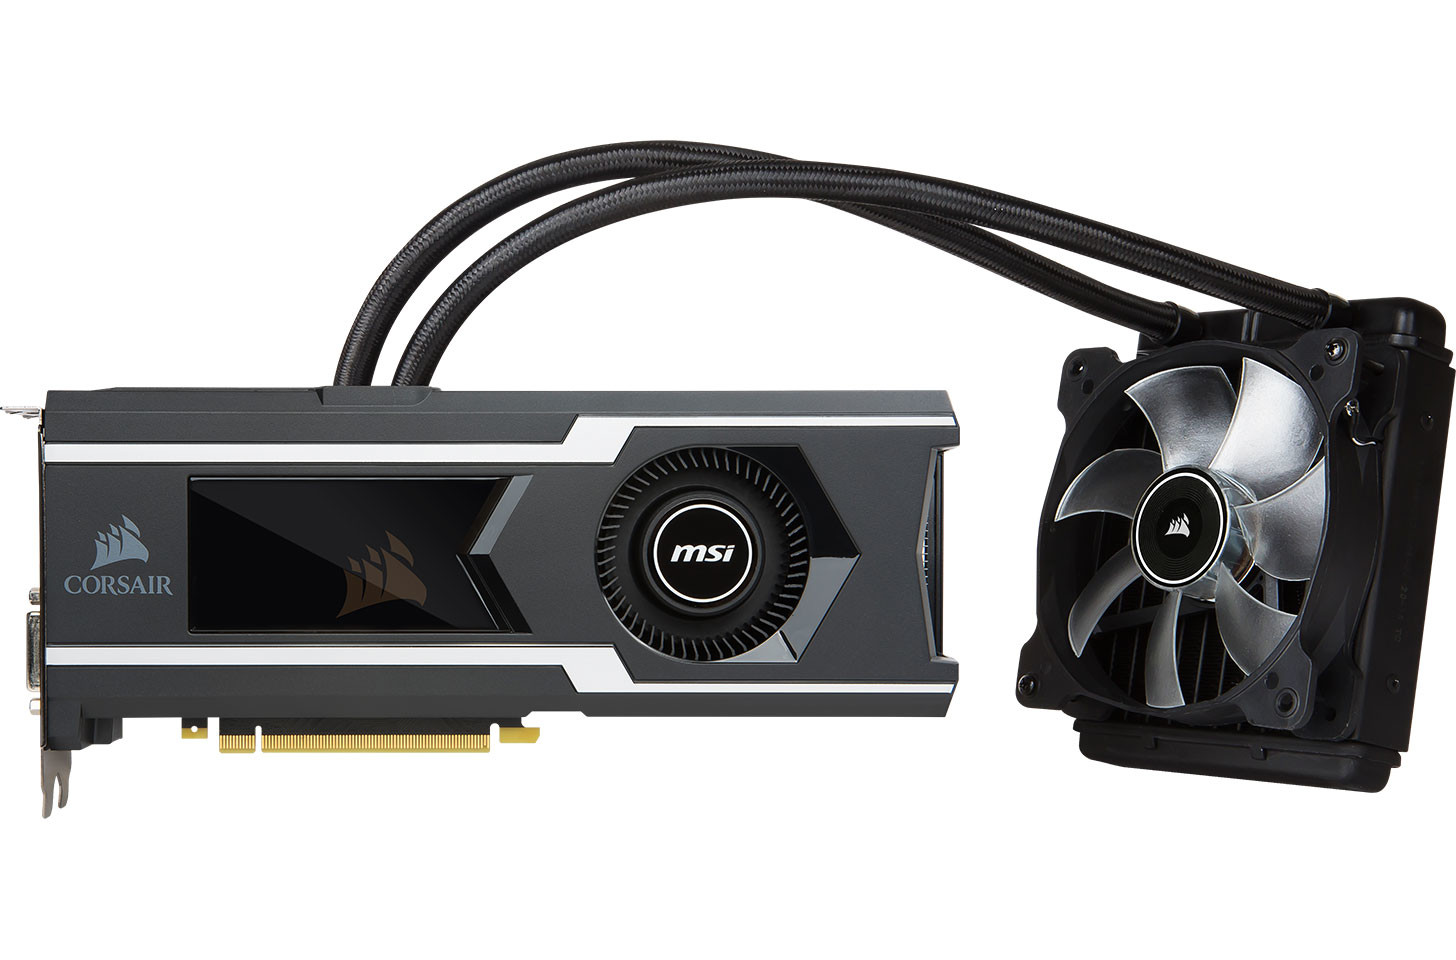 Msi Announces The Geforce Gtx 1080 Ti Sea Hawk Gaming Graphics Card Techpowerup